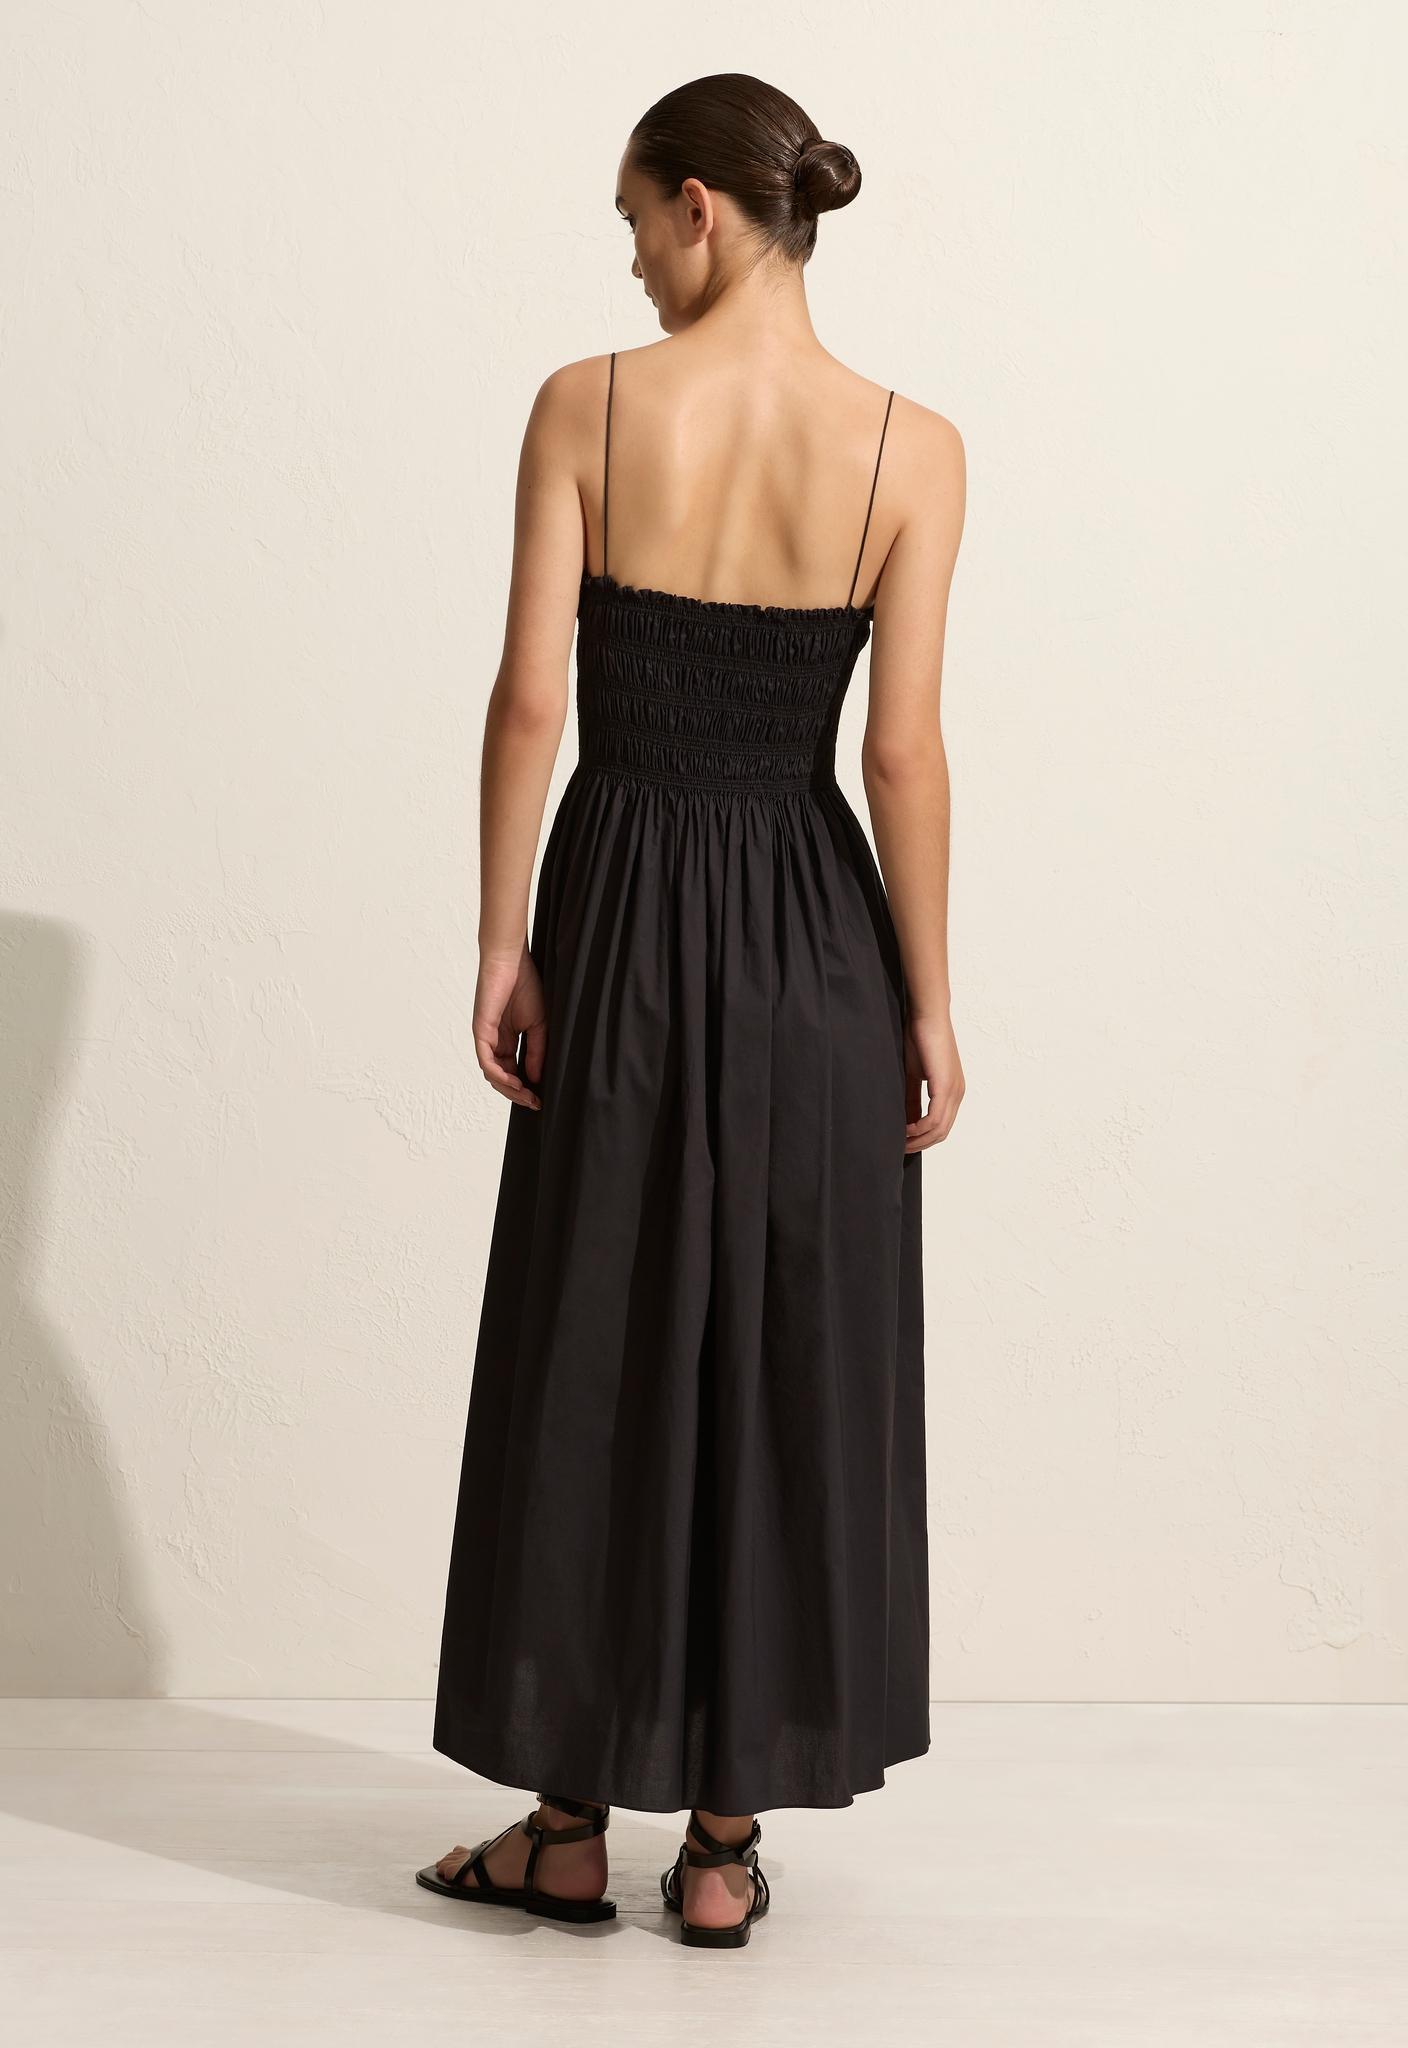 Shirred Bodice Dress - Black - Matteau